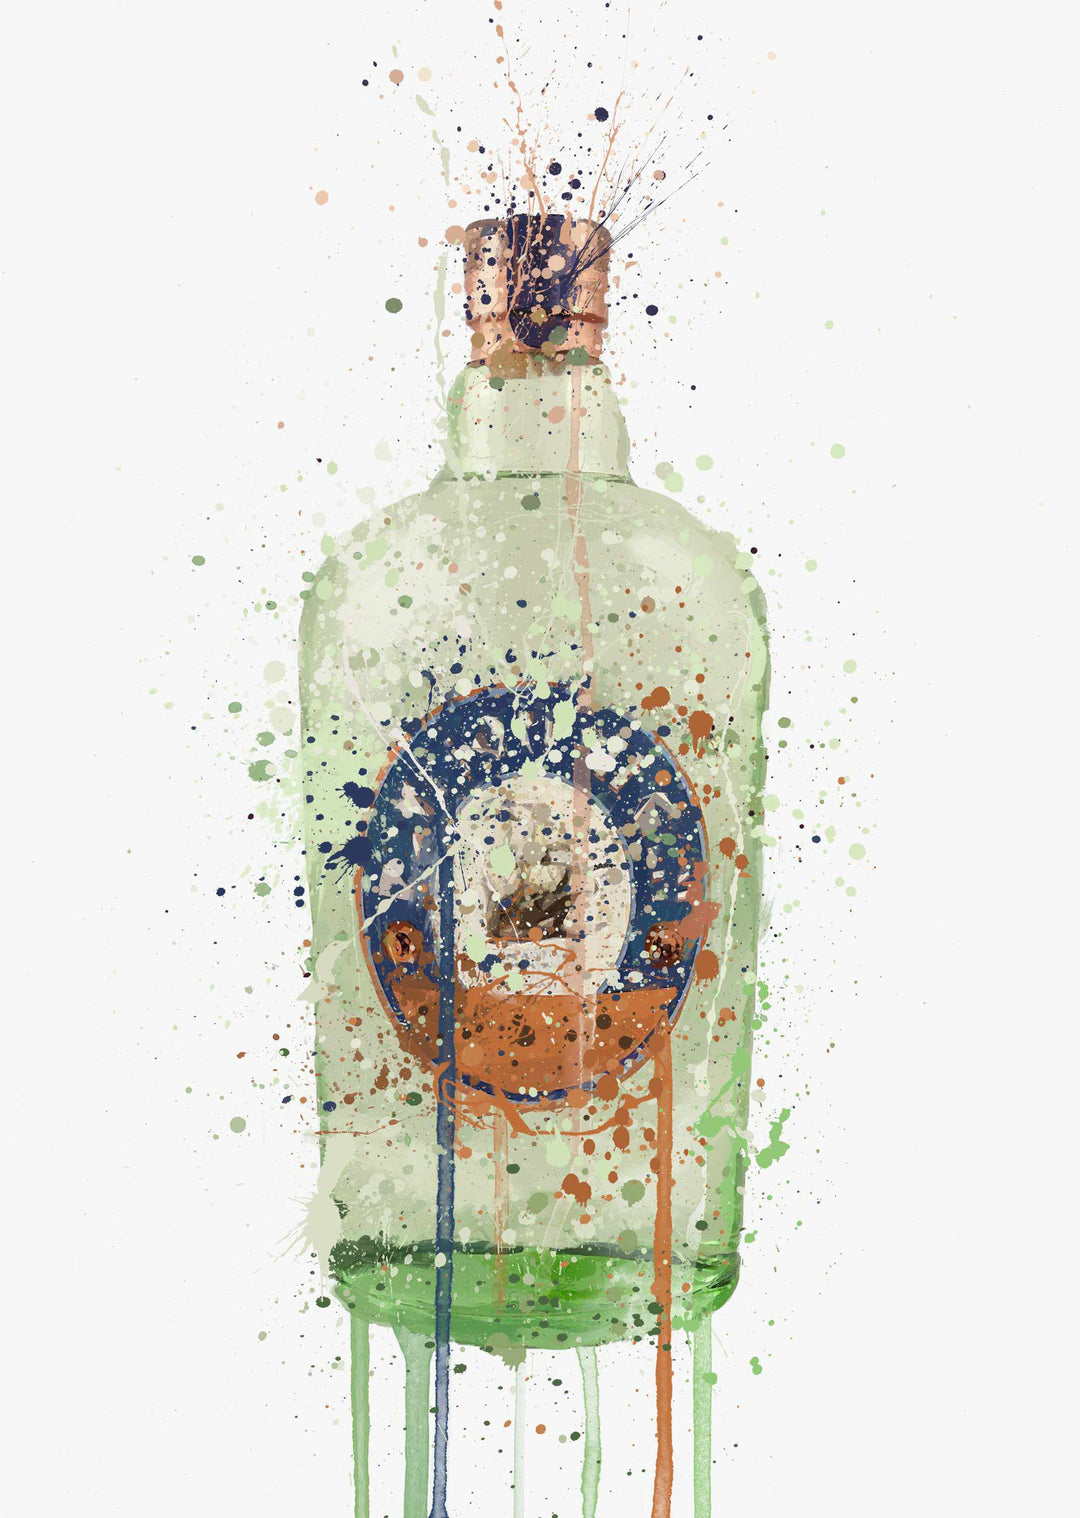 Gin Bottle Wall Art Print 'Sea Glass'